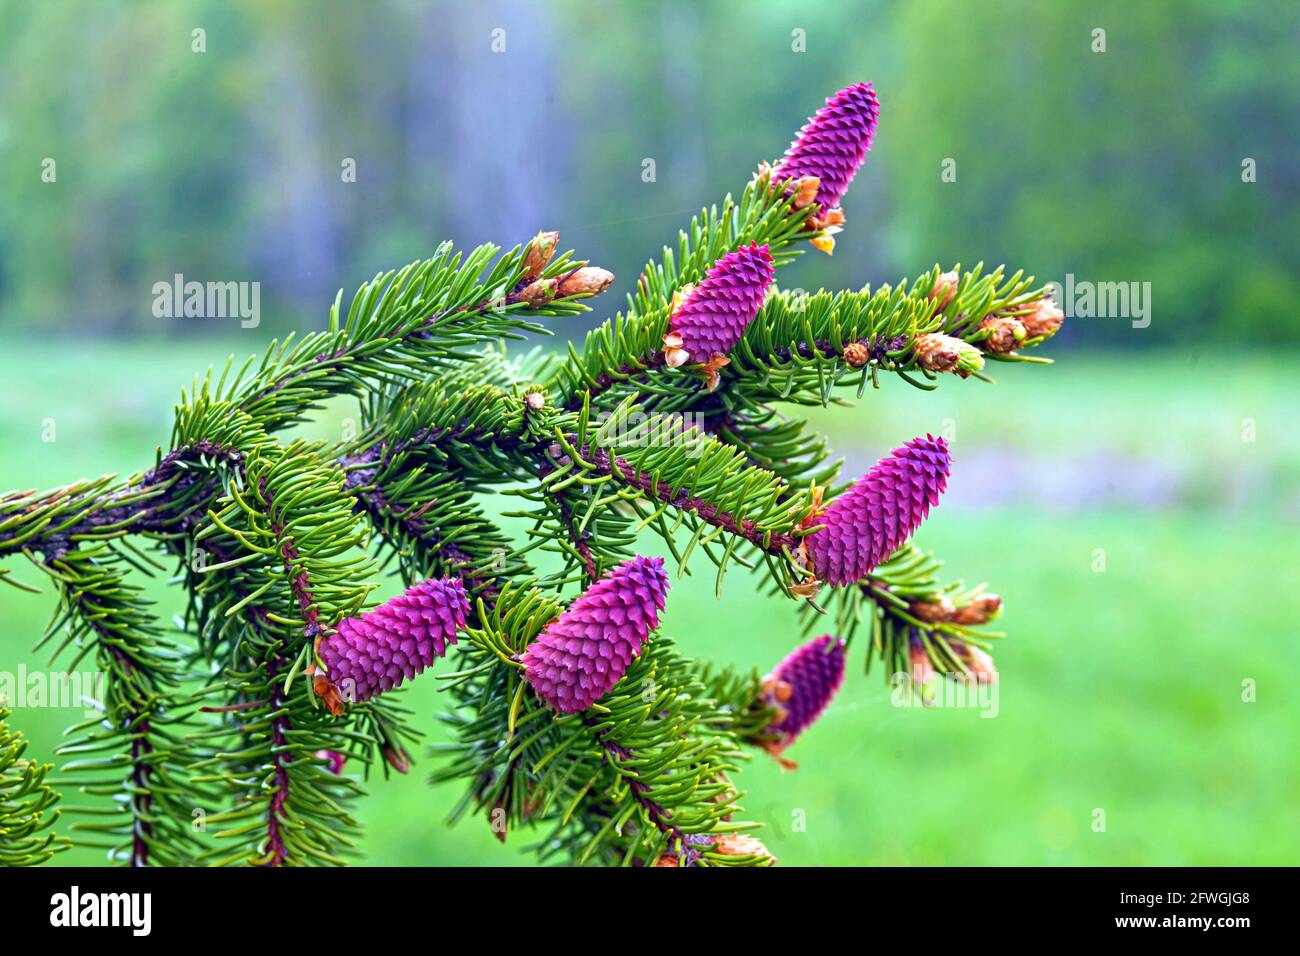 Norwegian spruce with flowers (Picea abies) Sweden   Photo: Bengt Ekman / TT / coed 2706 Stock Photo